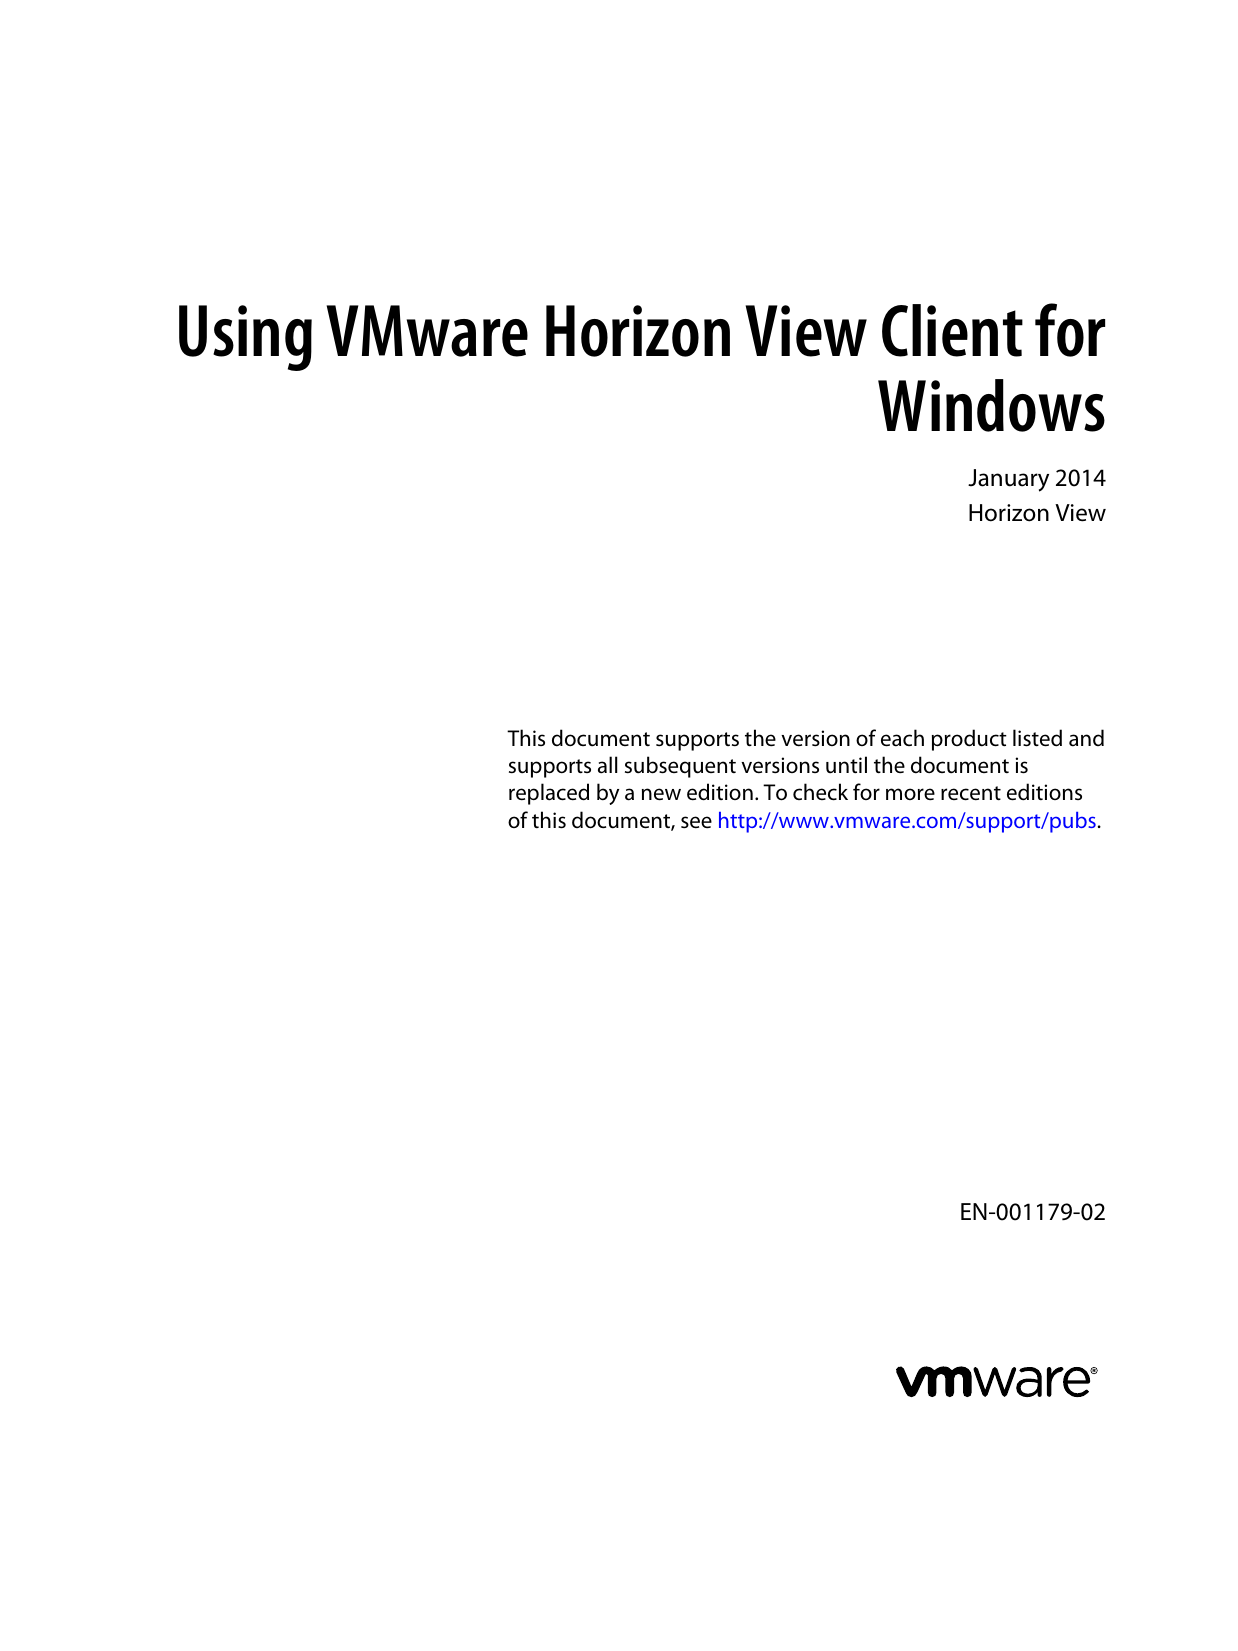 vmware horizon client download for windows 7 32-bit